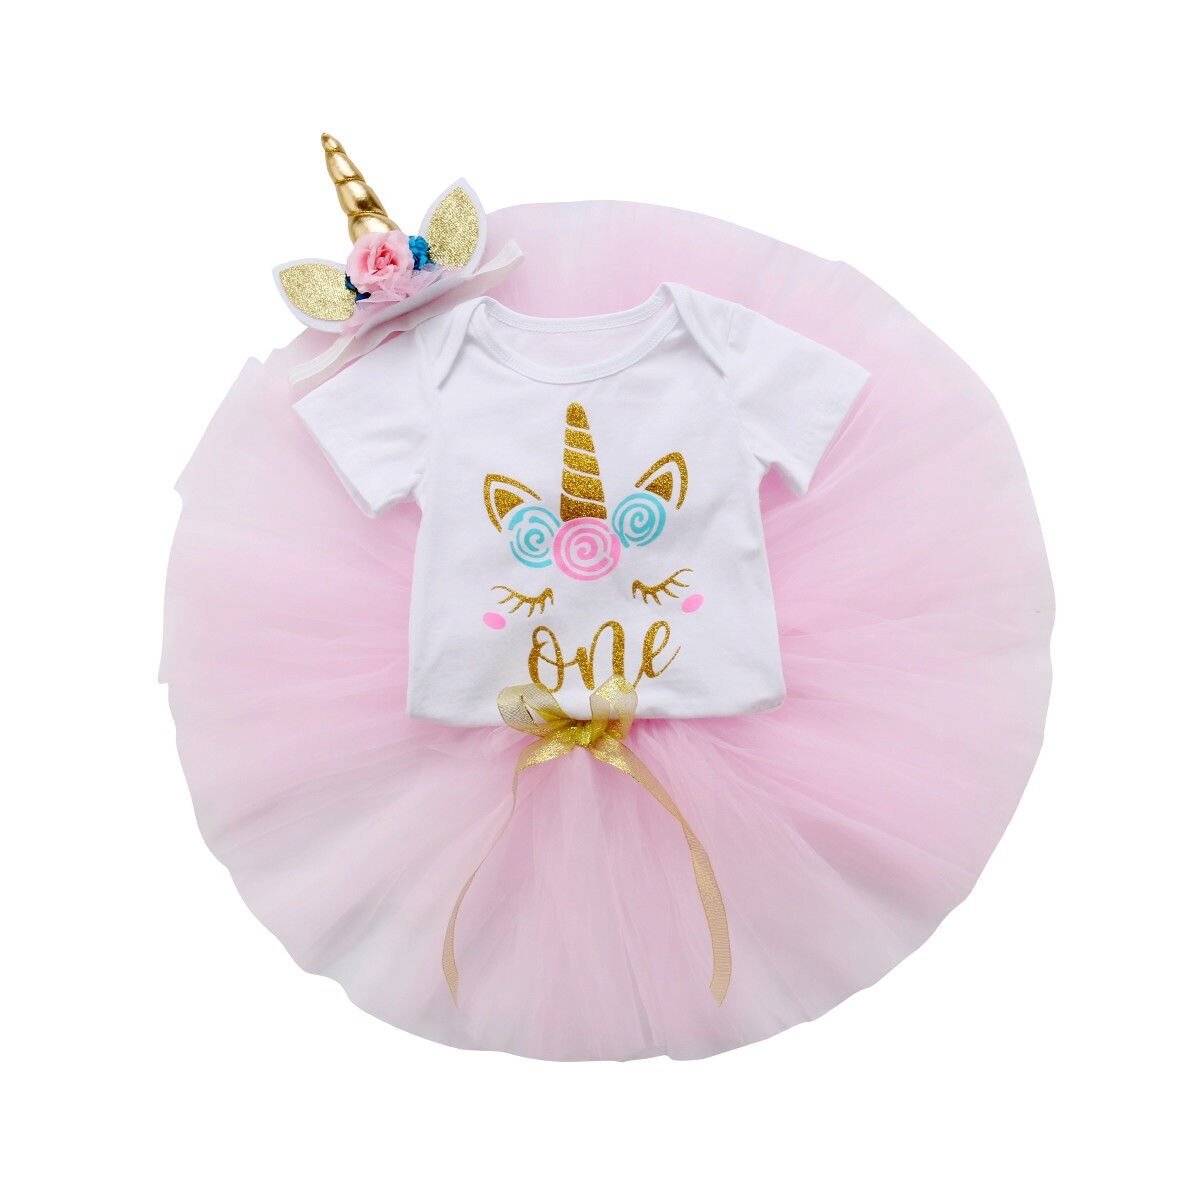 Girl Newborn Its My First Birthday Cartoon Costume Party Outfits Romper+Tutu Skirt+Flower Headband Dress Clothes Set